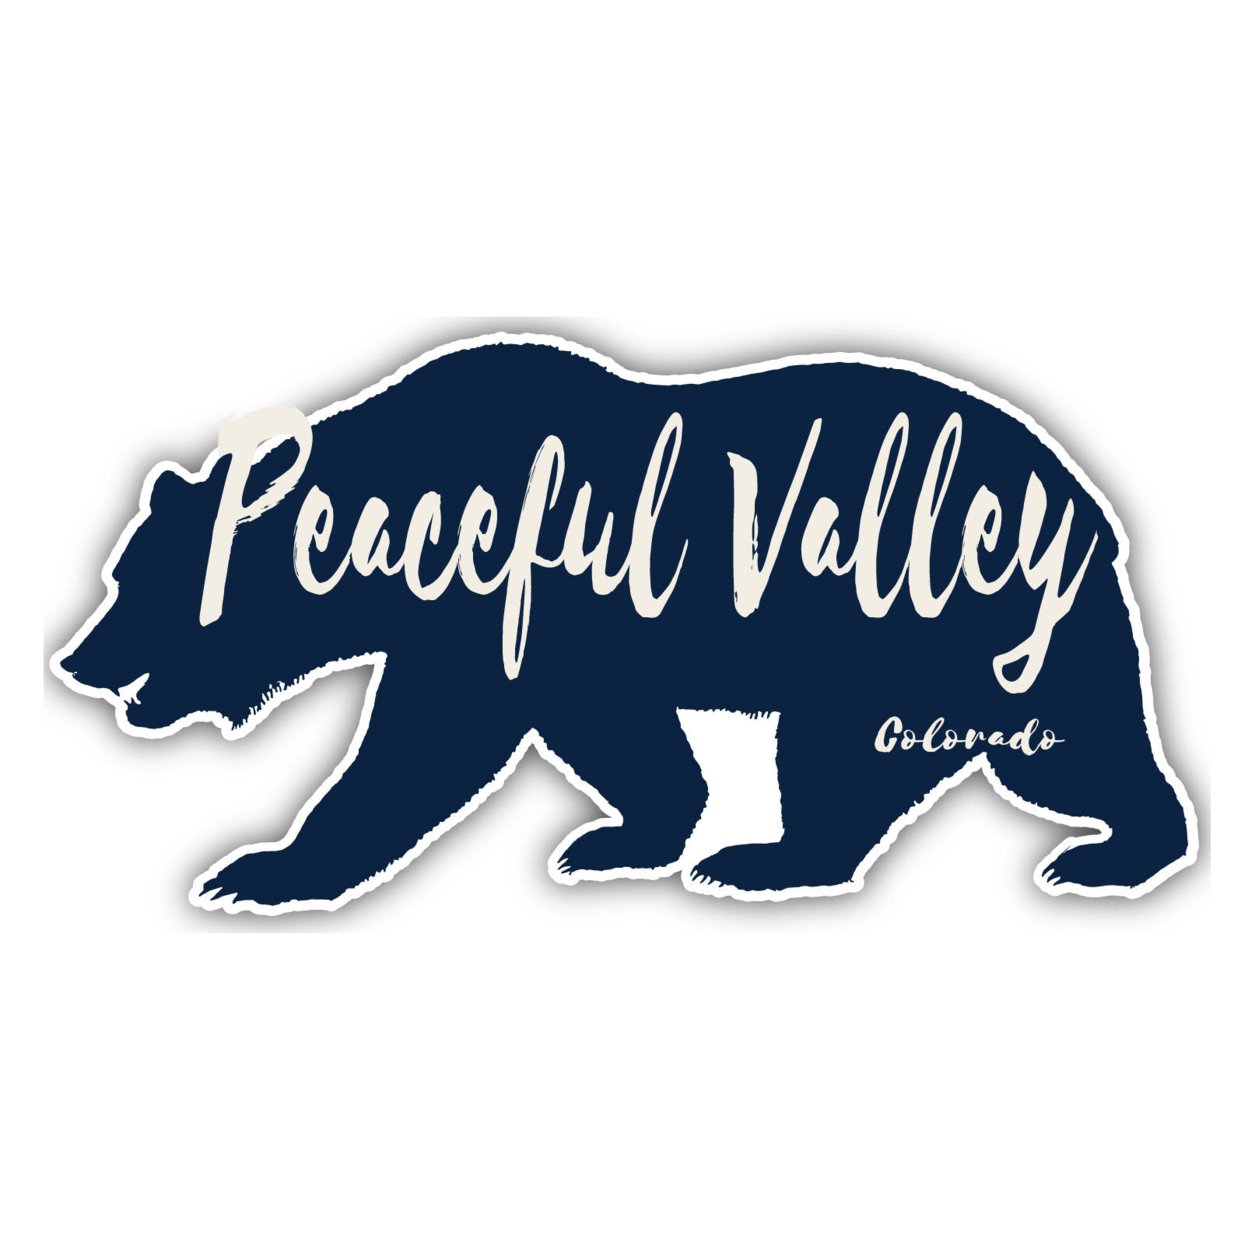 Peaceful Valley Colorado Souvenir Decorative Stickers (Choose Theme And Size) - Single Unit, 4-Inch, Bear